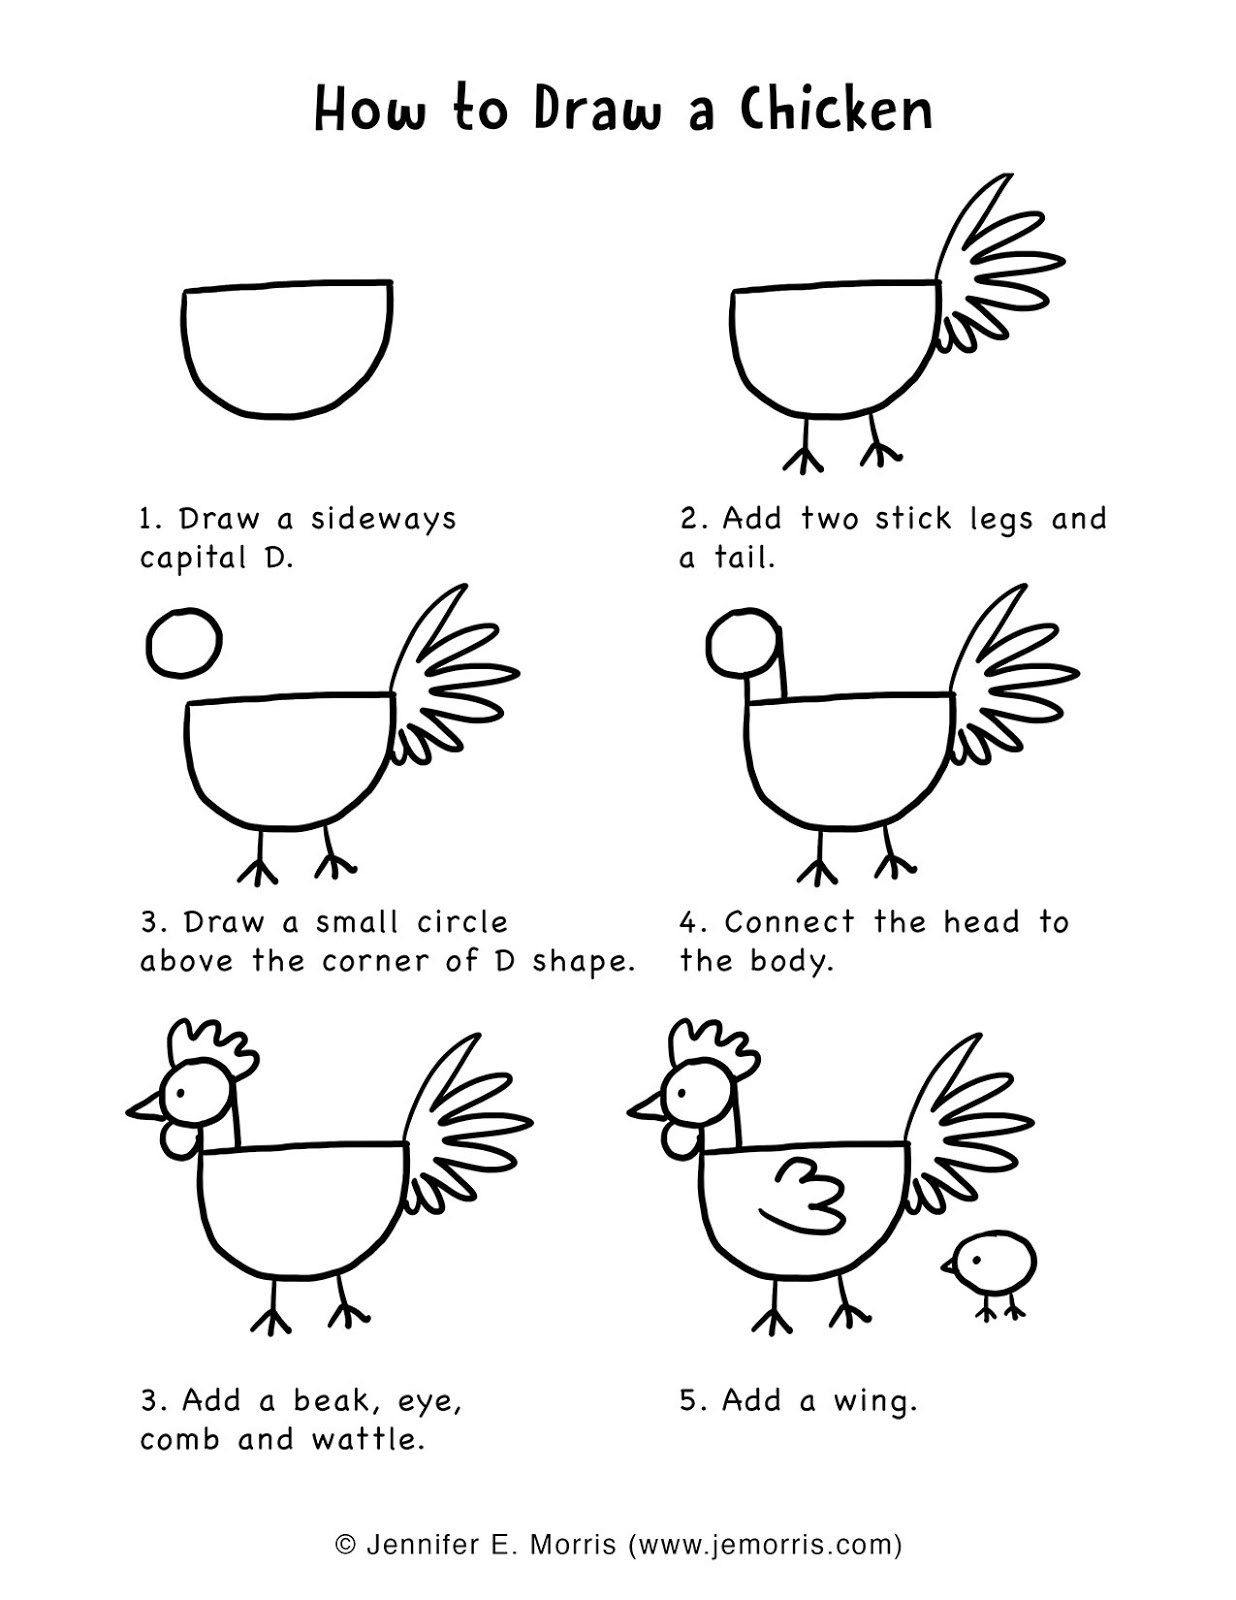 Jennifer E. Morris: How to Draw a Chicken